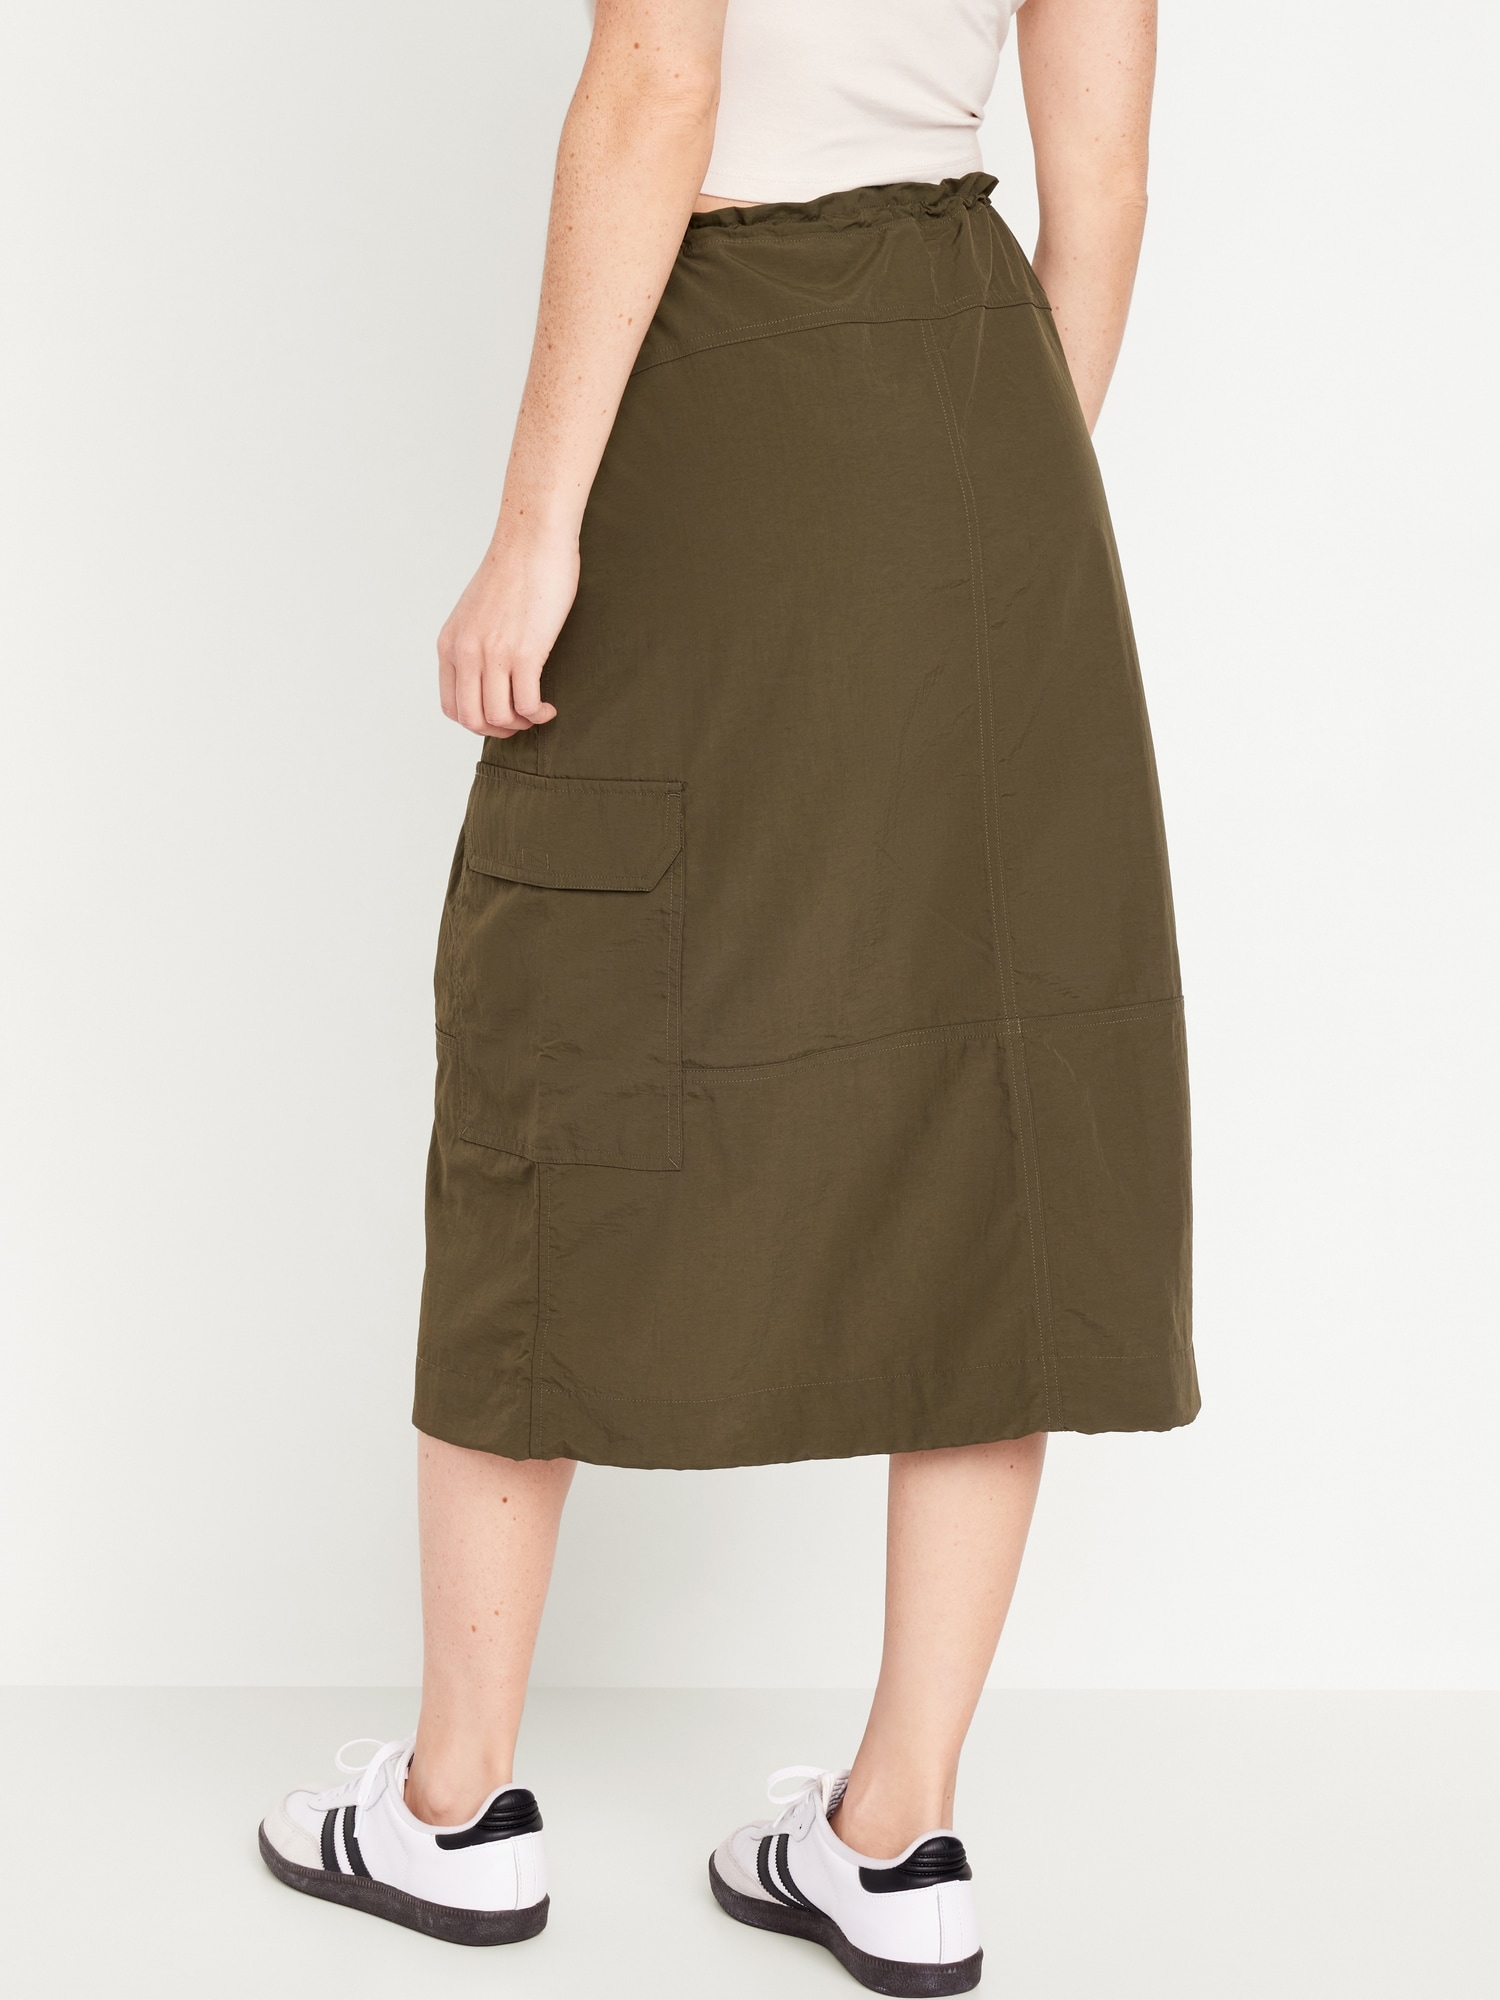 A2Y Women's Basic Solid Ponte Knee Length Slit Techno Span High Waist  Pencil Skirt Wood Pink M 